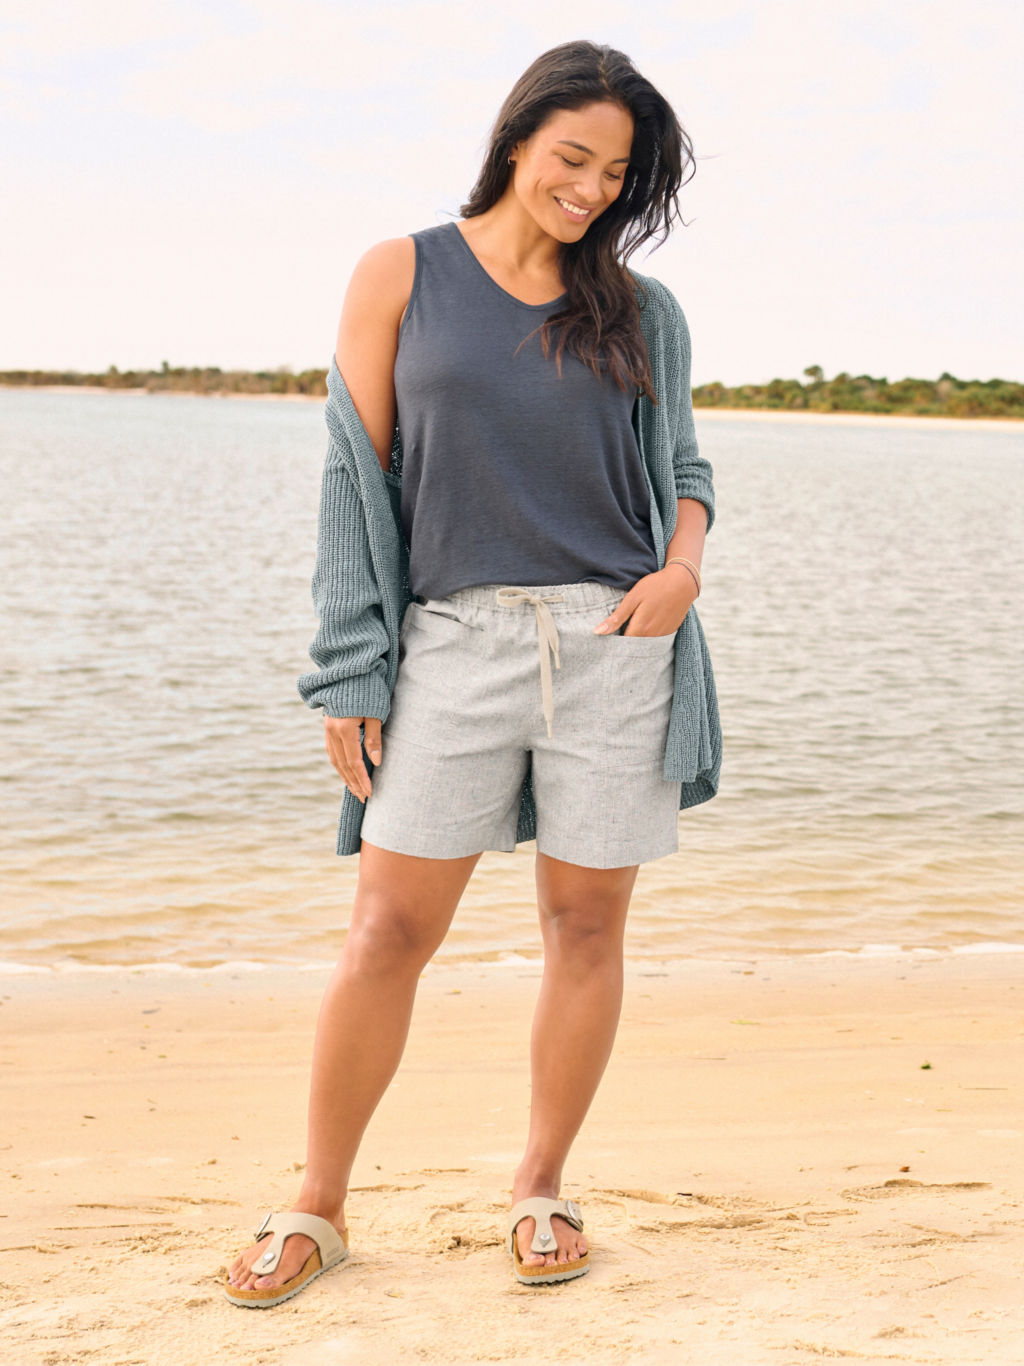 A model wearing a linen shorts, a navy sleeveless tee, and a seafoam green cardigan stands on a sandy beach.